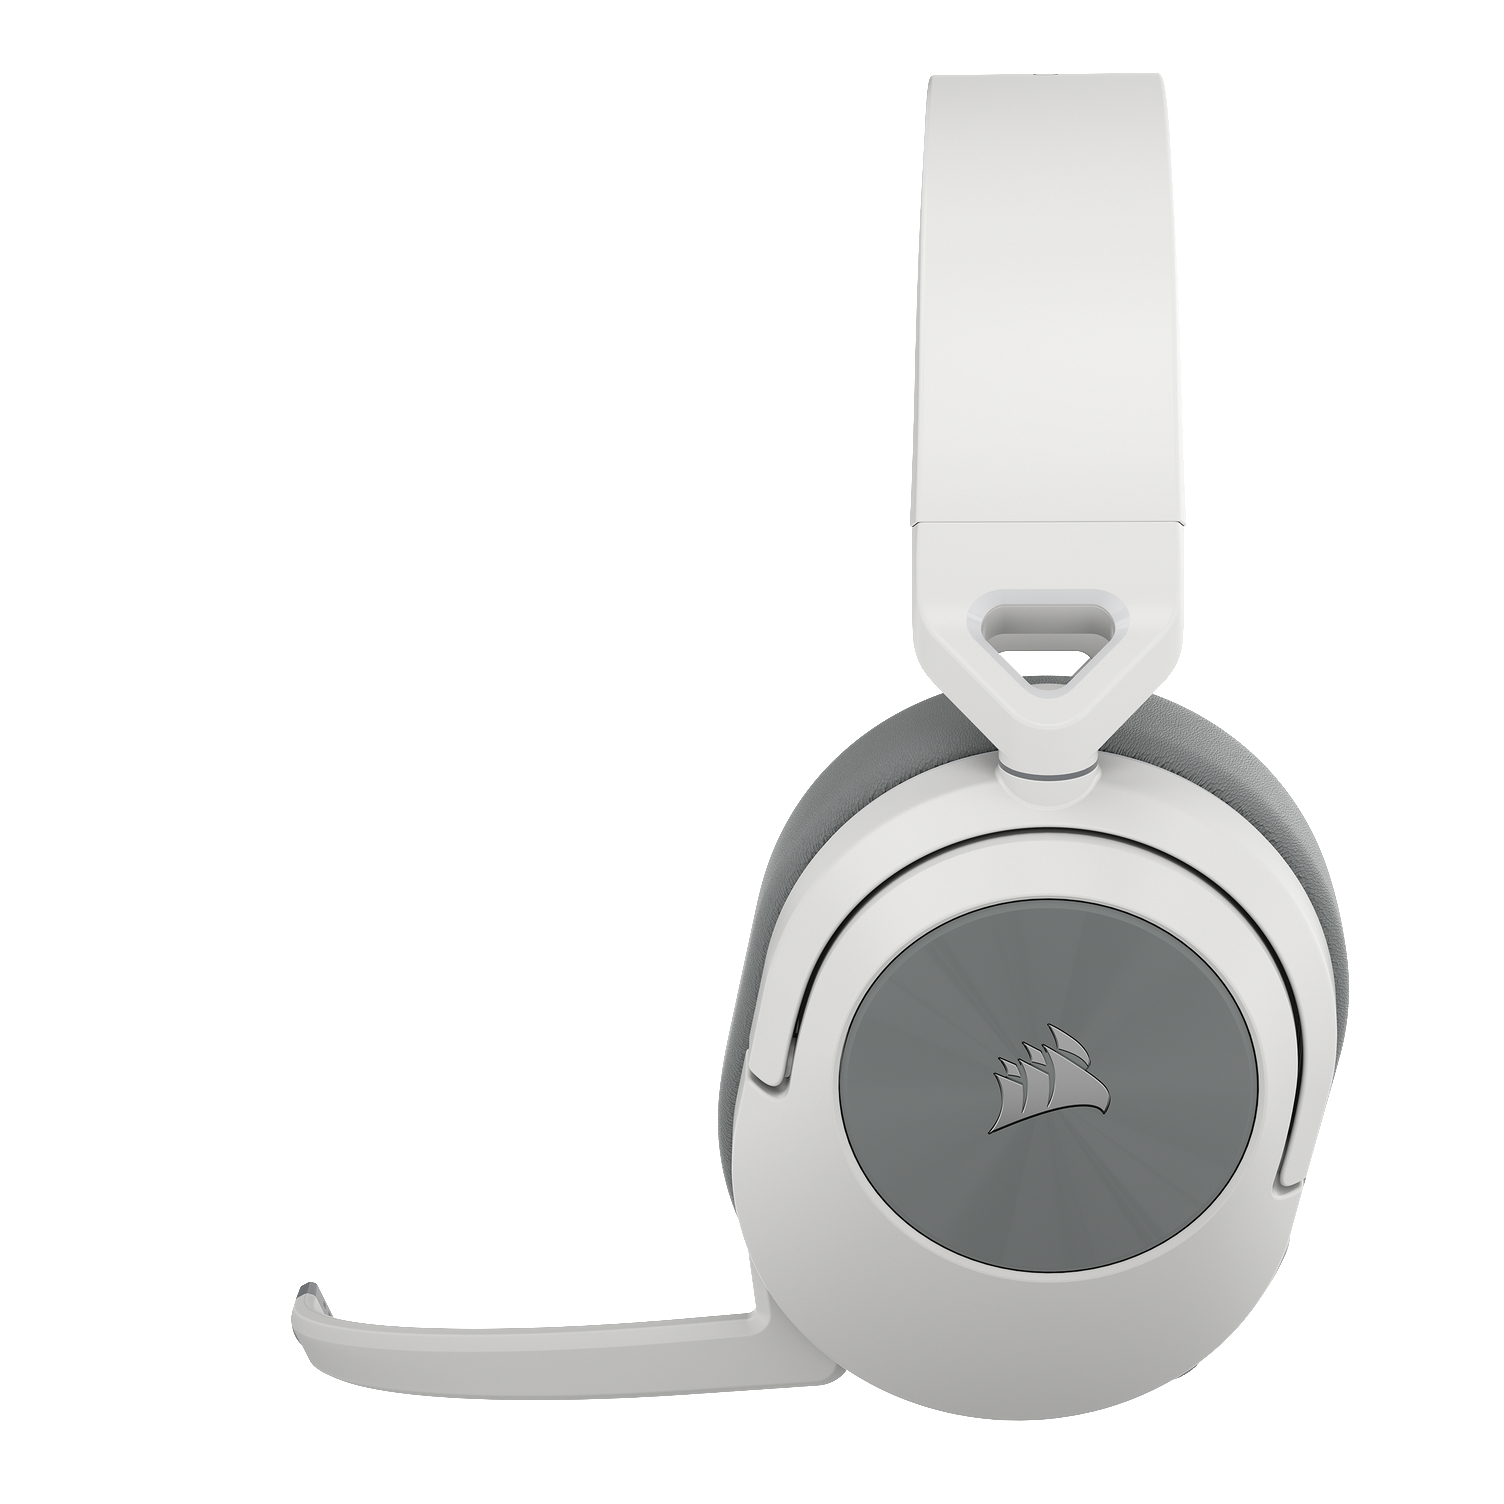 Weiß Over-ear Headset Bluetooth Gaming Wireless, CORSAIR HS55